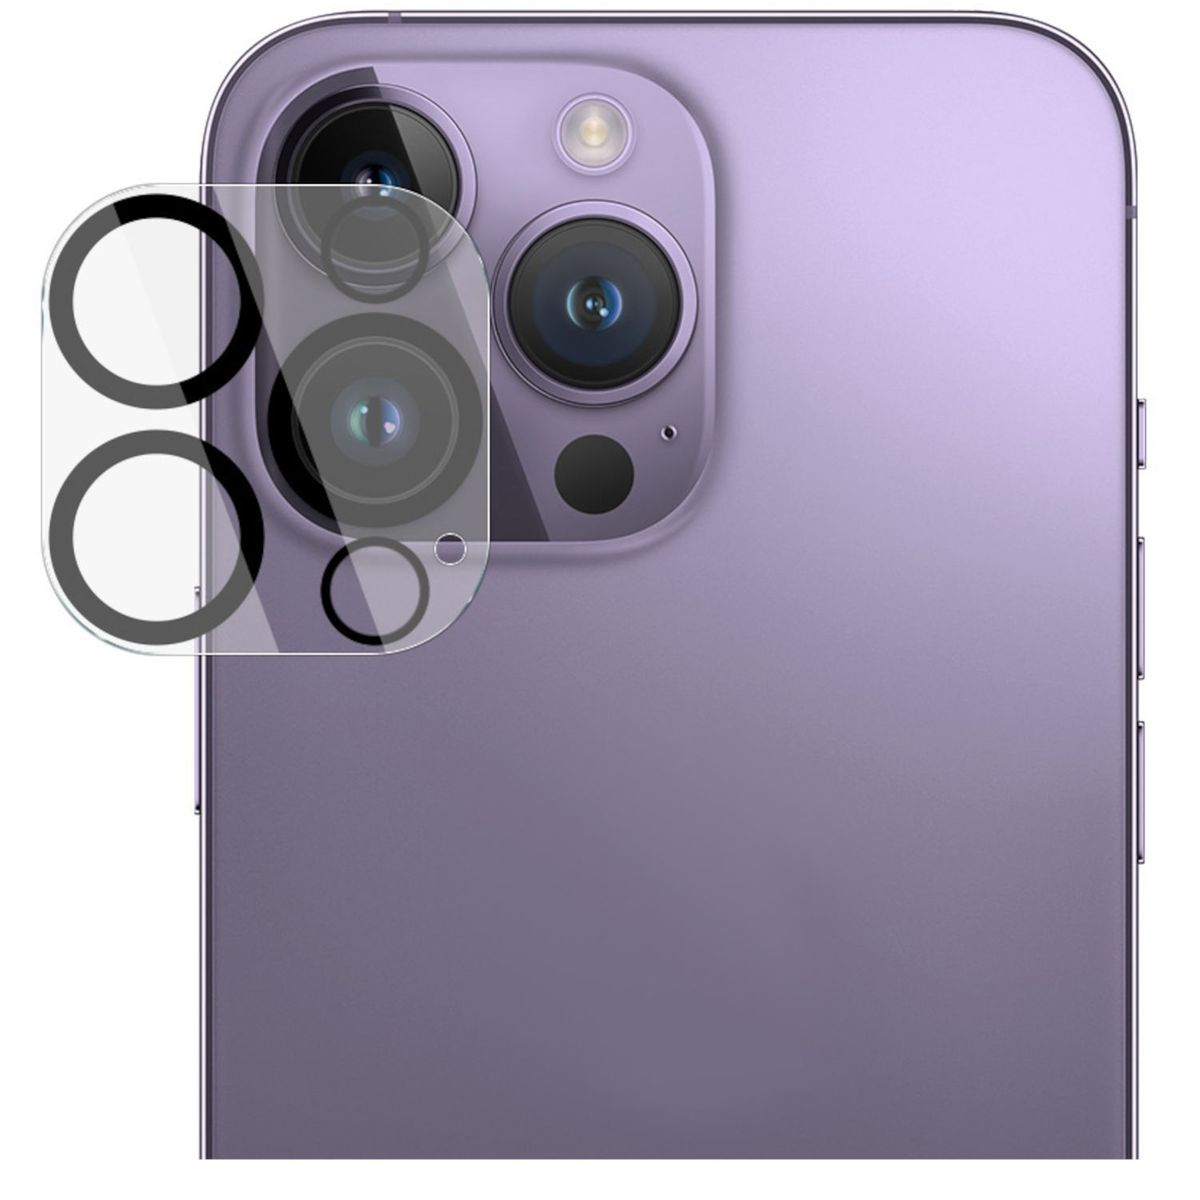 WIGENTO Schutzglas Kamera Linse Hart Glas Schutzglas(für 15 iPhone / Pro Max) Apple 15 Pro